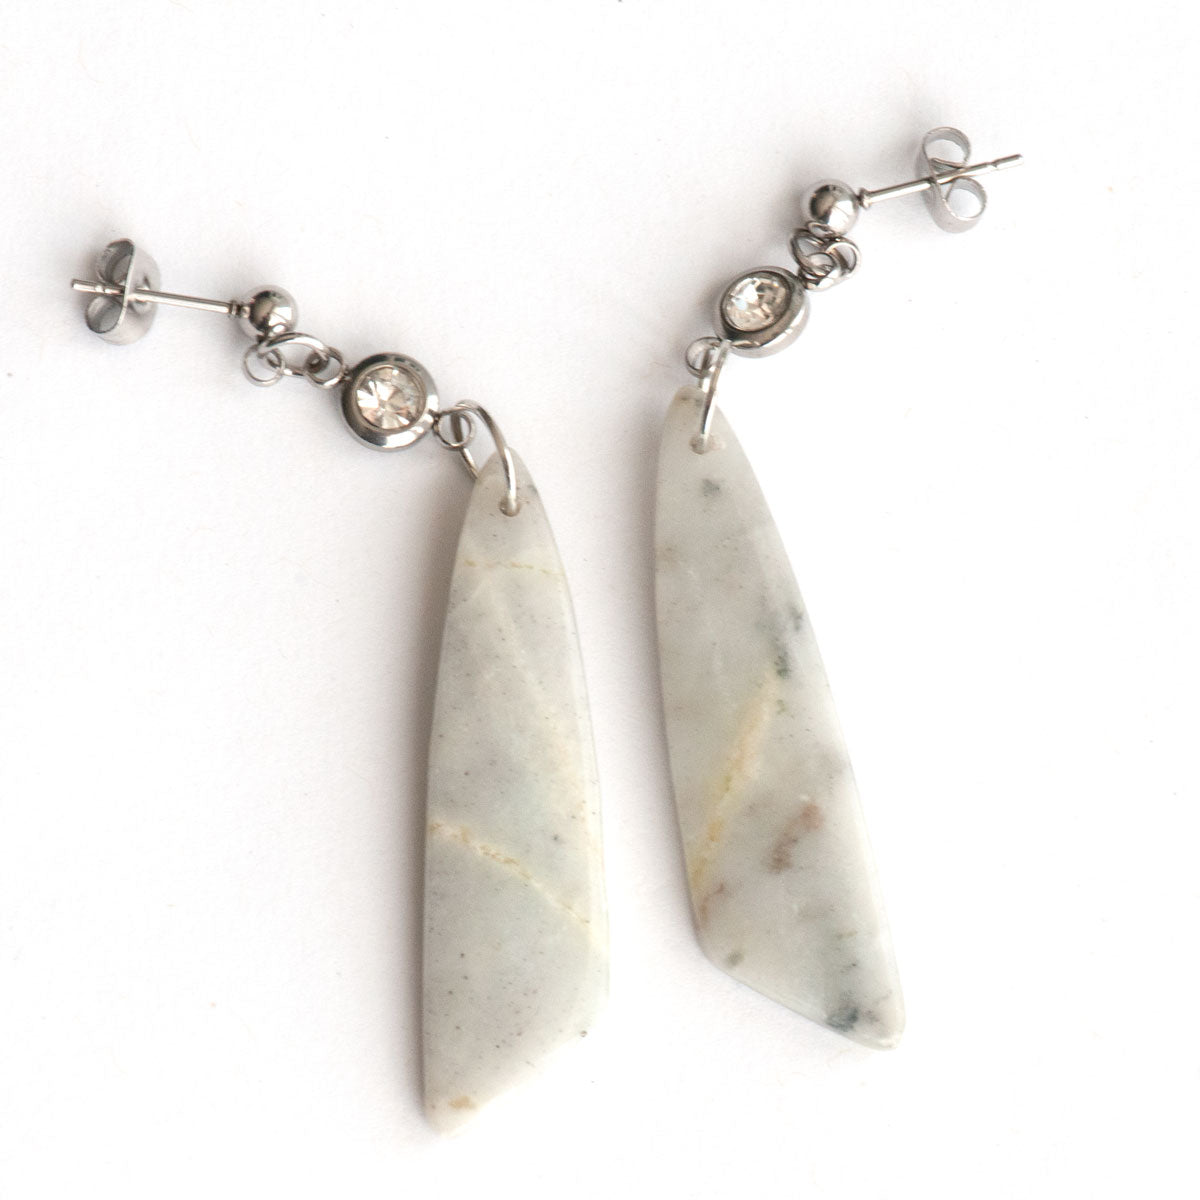 Handmade Jade earrings in white and grey